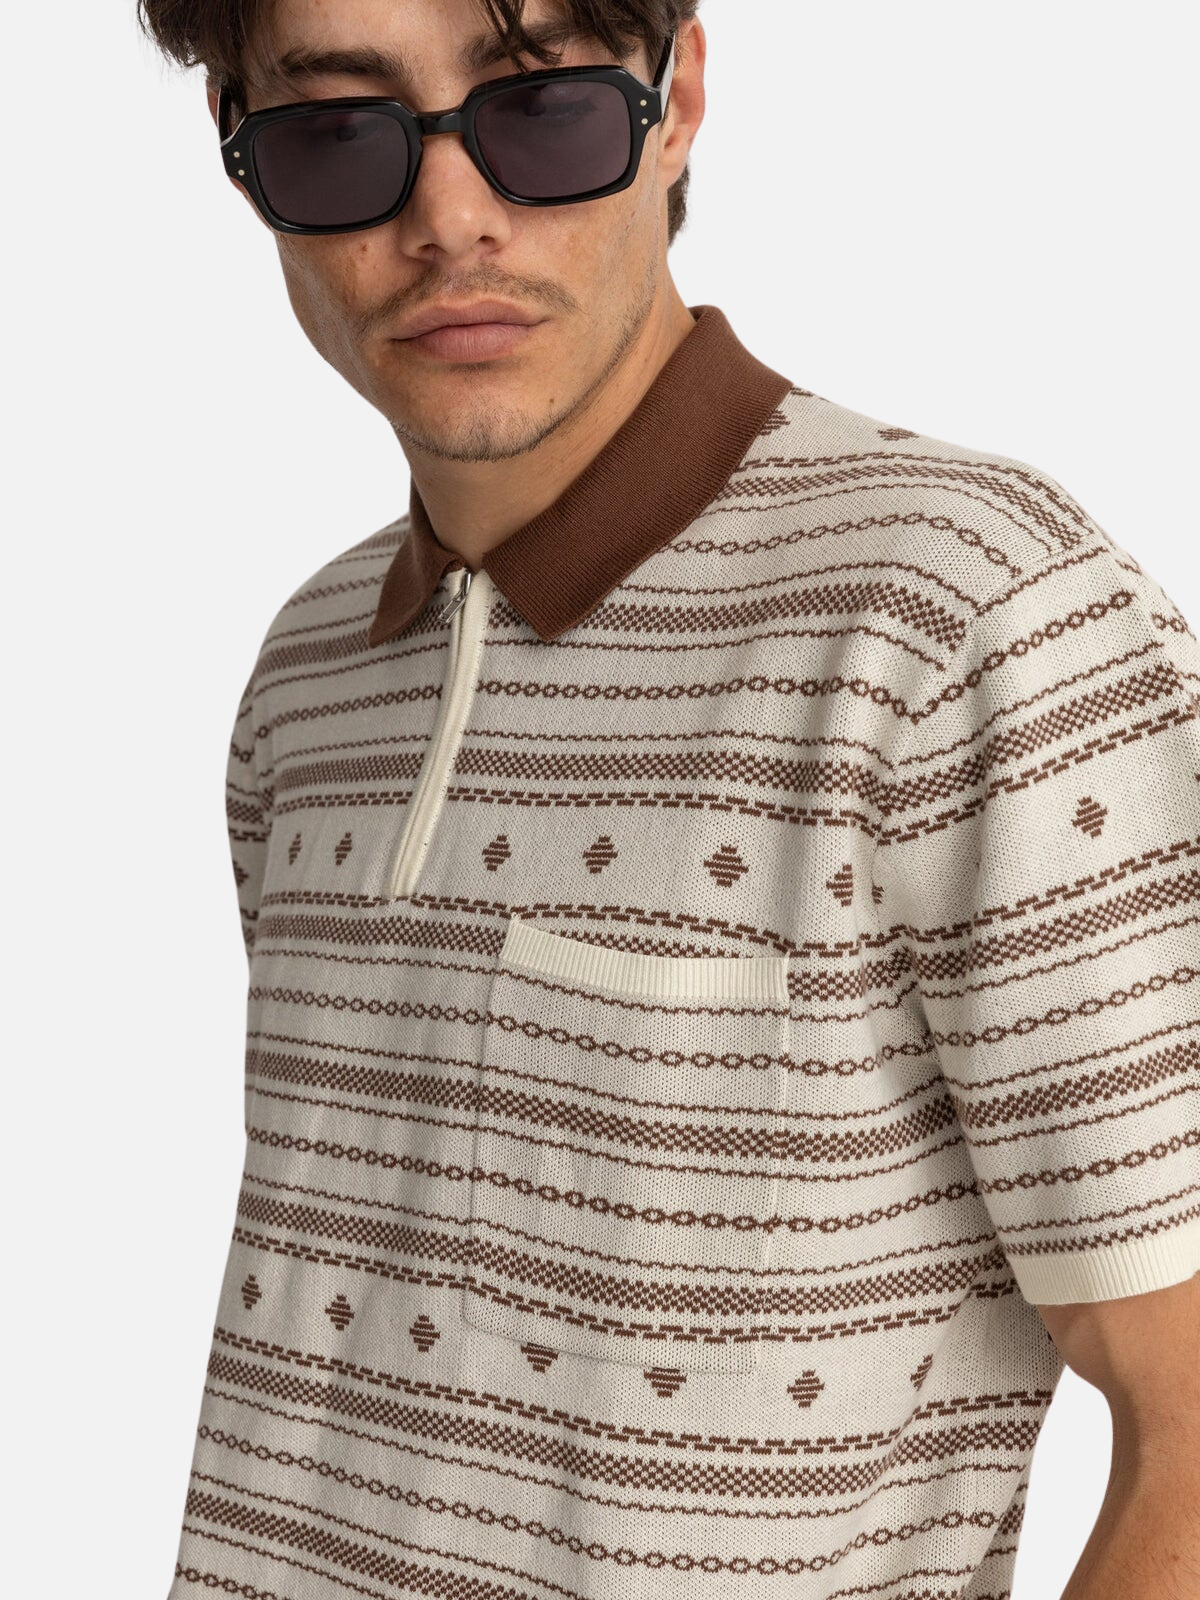 rhythm jacquard ss short sleeve knit sweater polo natural cream brown tan geometric pattern kempt athens ga georgia men's clothing store